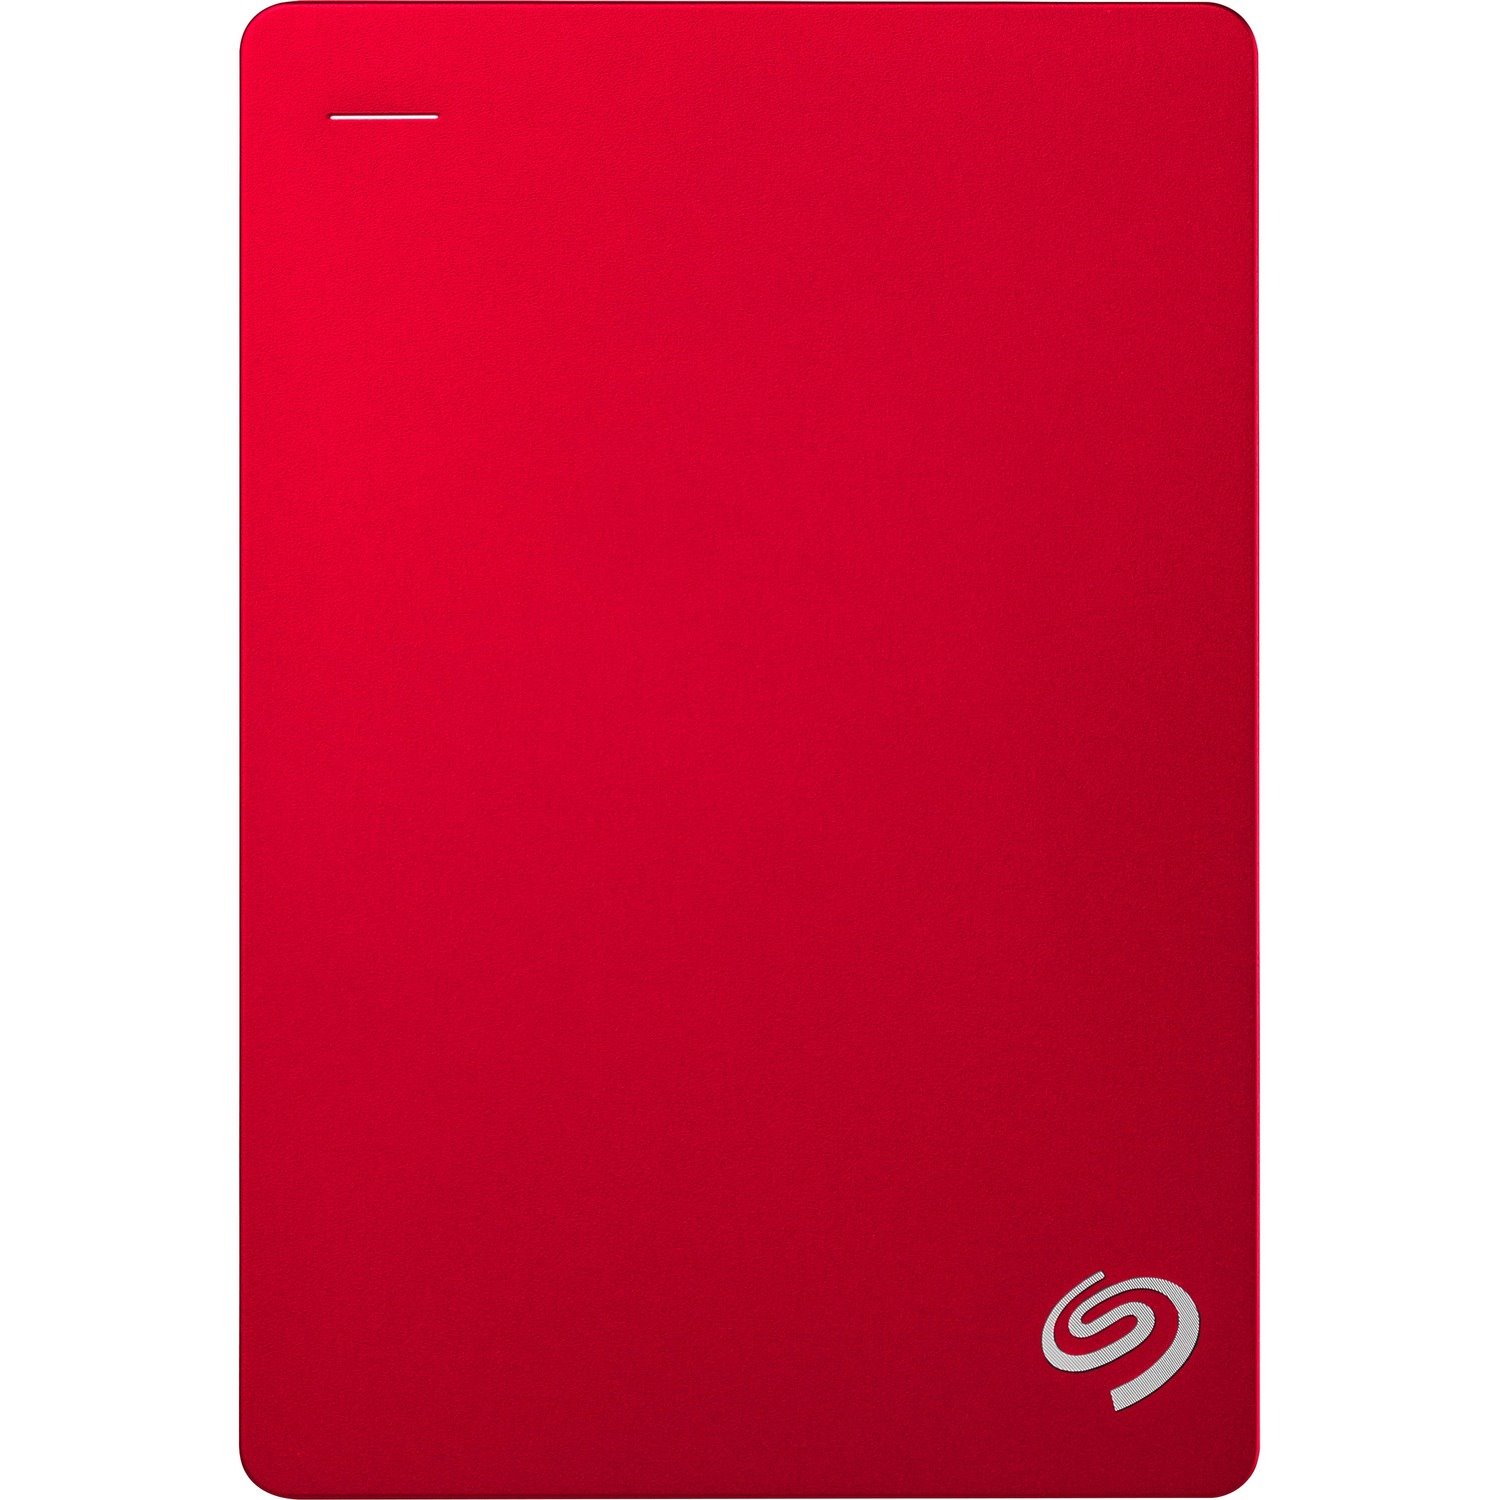 Seagate Backup Plus STDR5000103 5 TB Hard Drive - External - Red